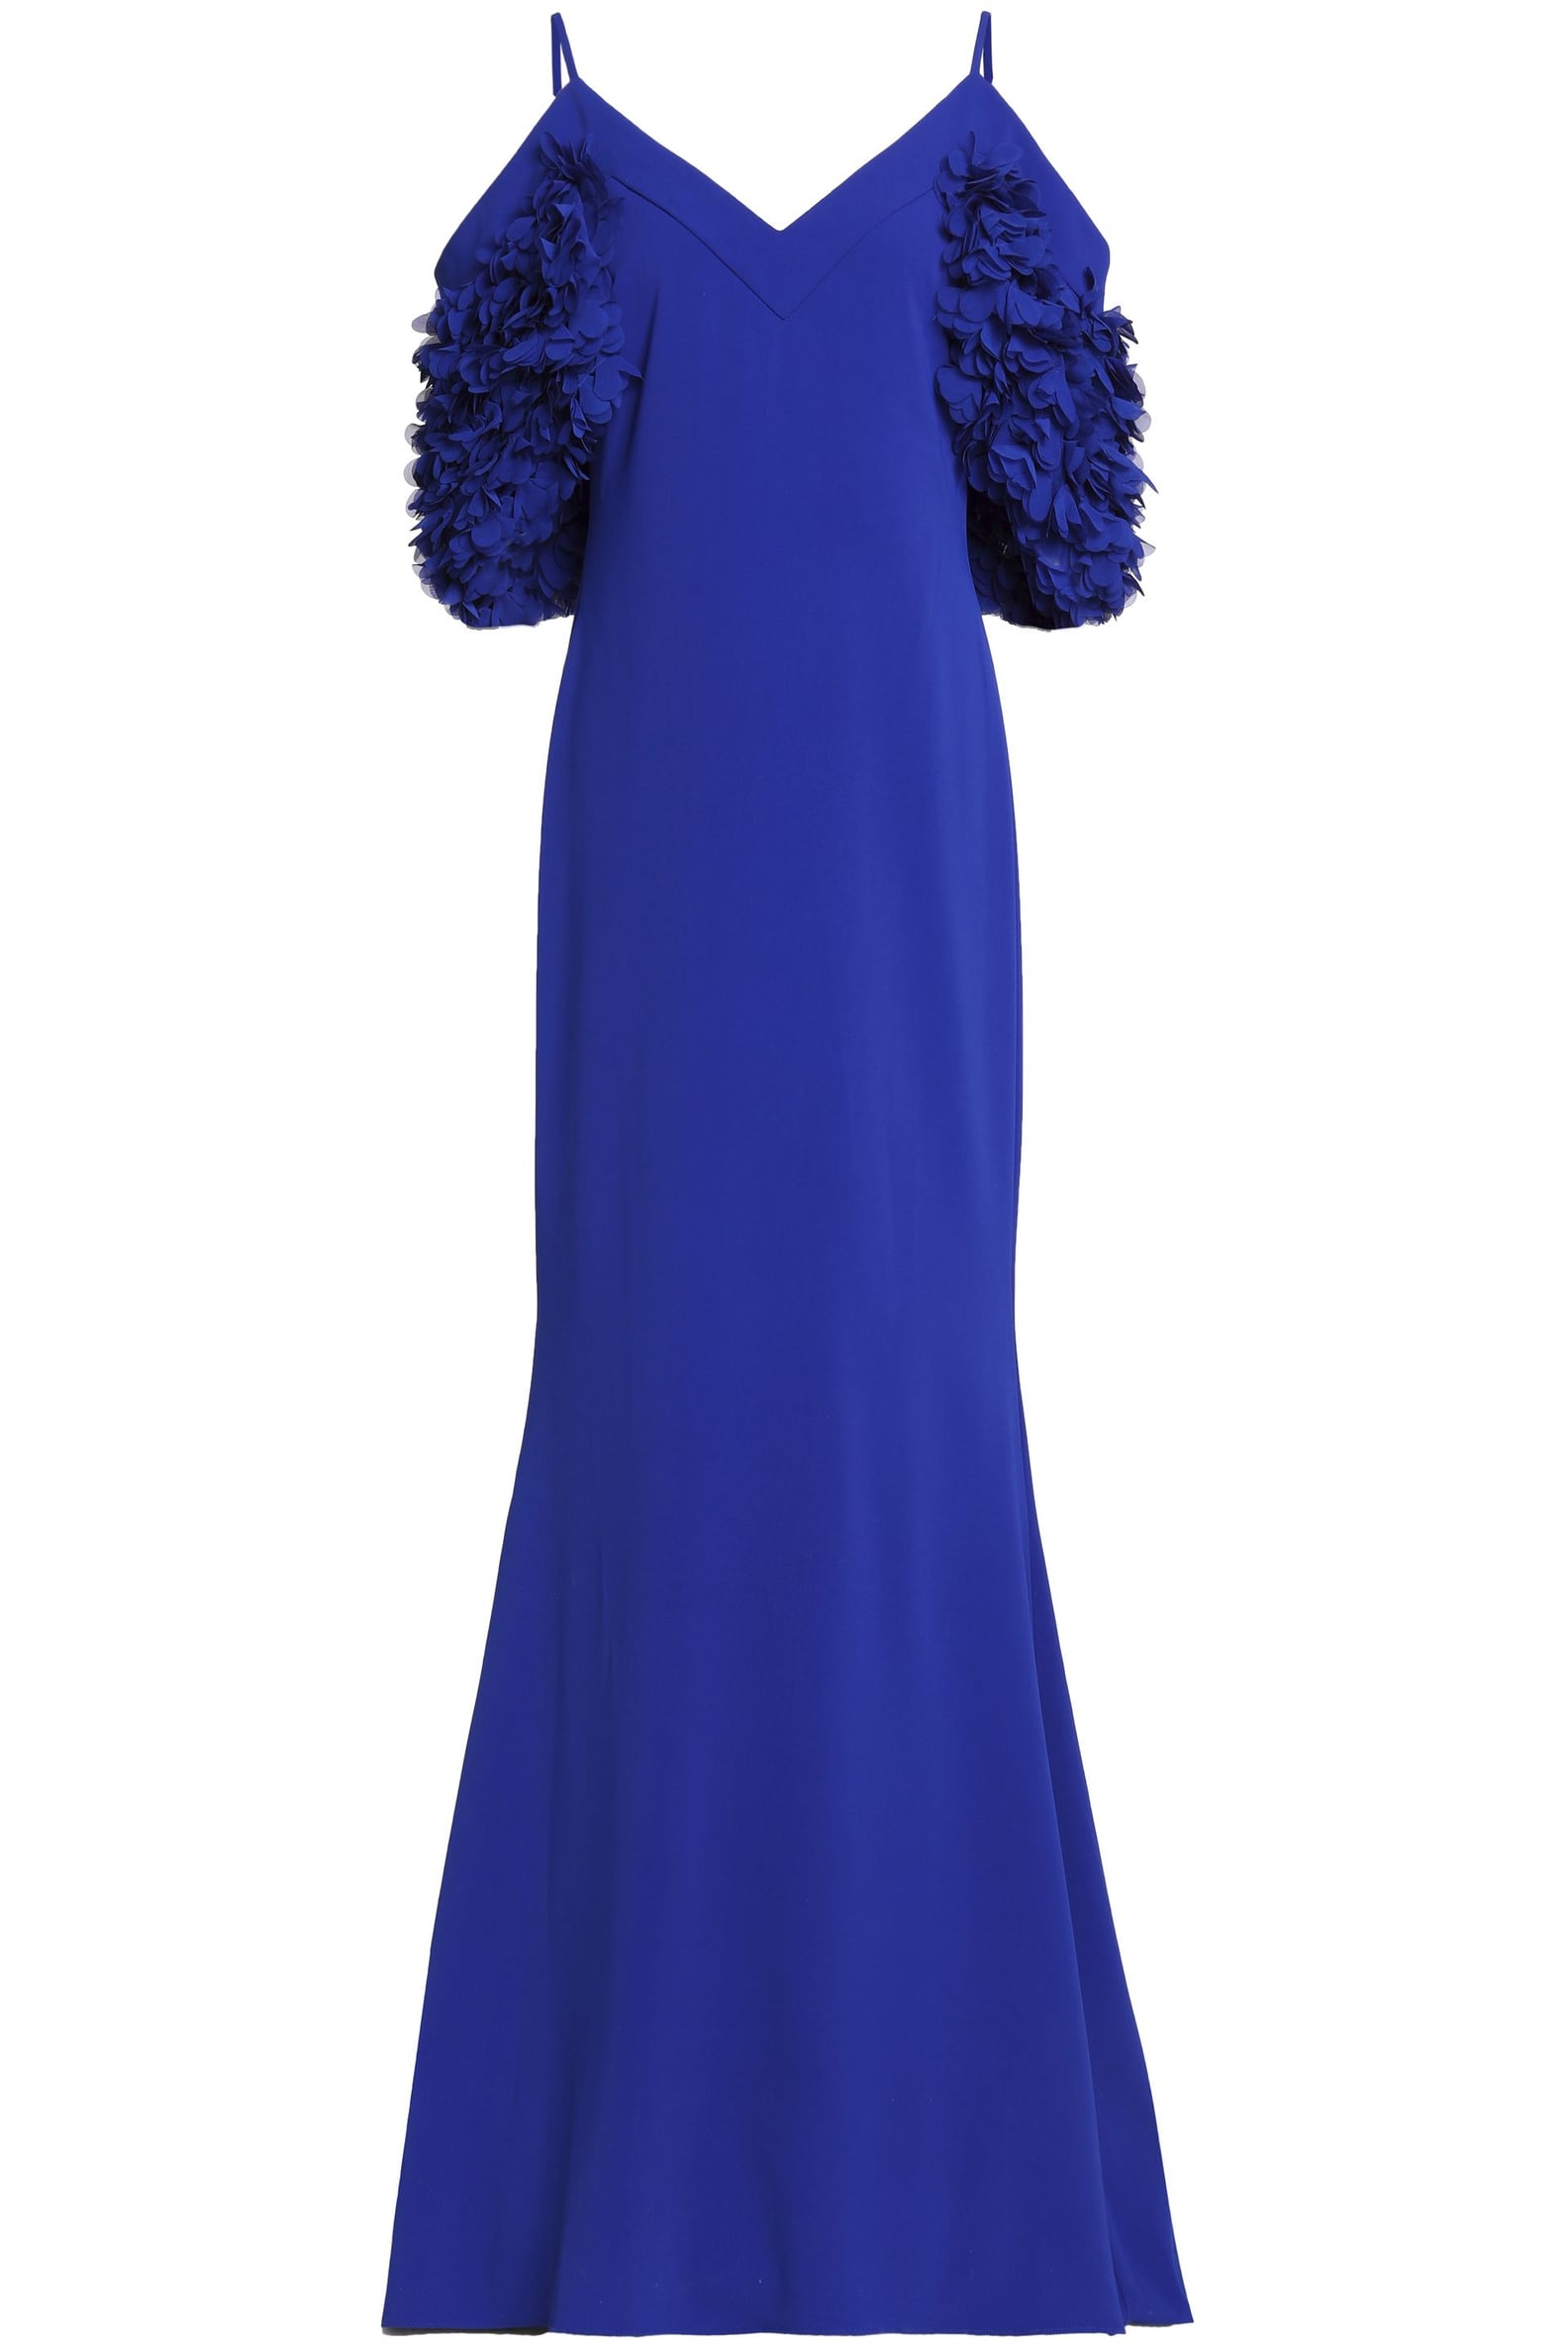 Rihanna Blue Bridesmaid Dress 2018 | POPSUGAR Fashion